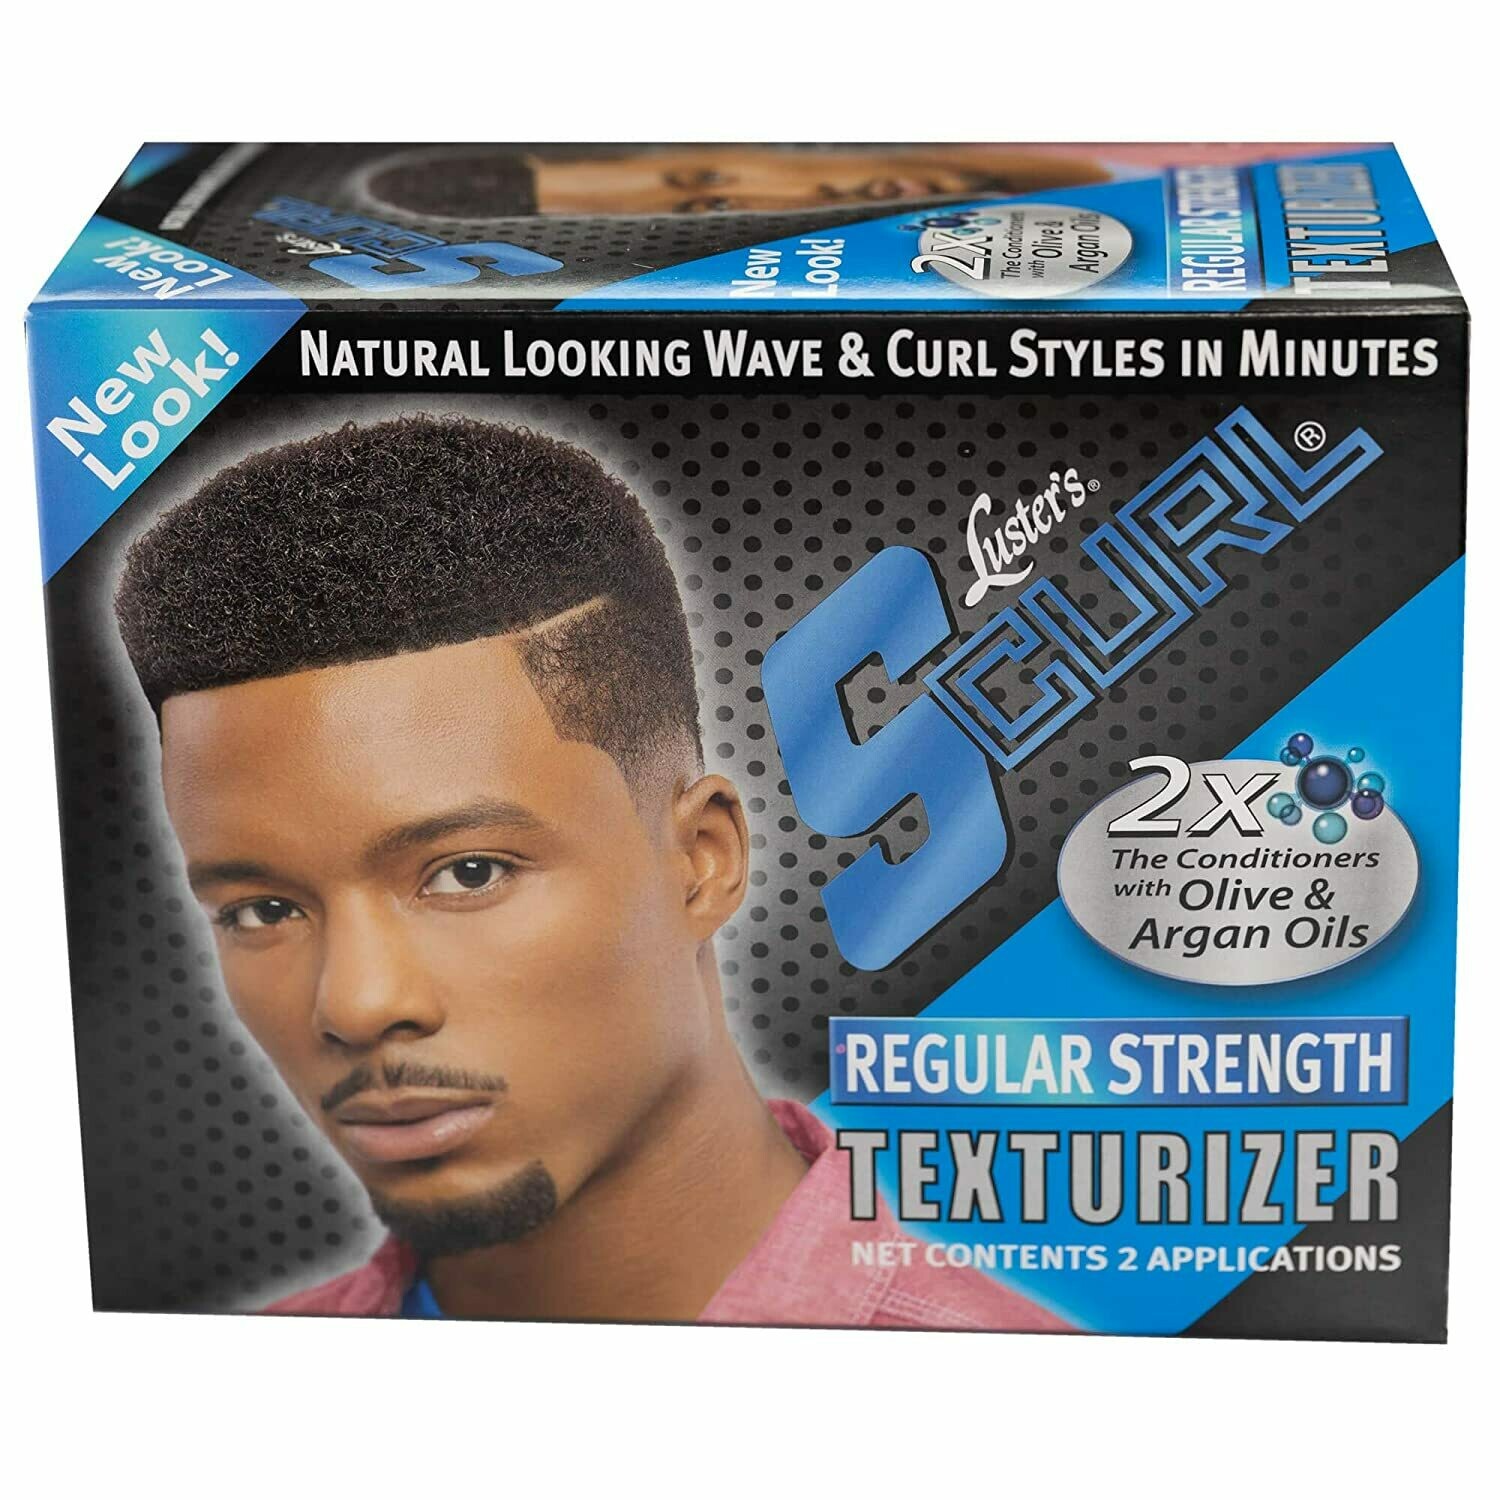 Luster's S-Curl Texturizer Regular Strength 2 Application Kit: $8.99